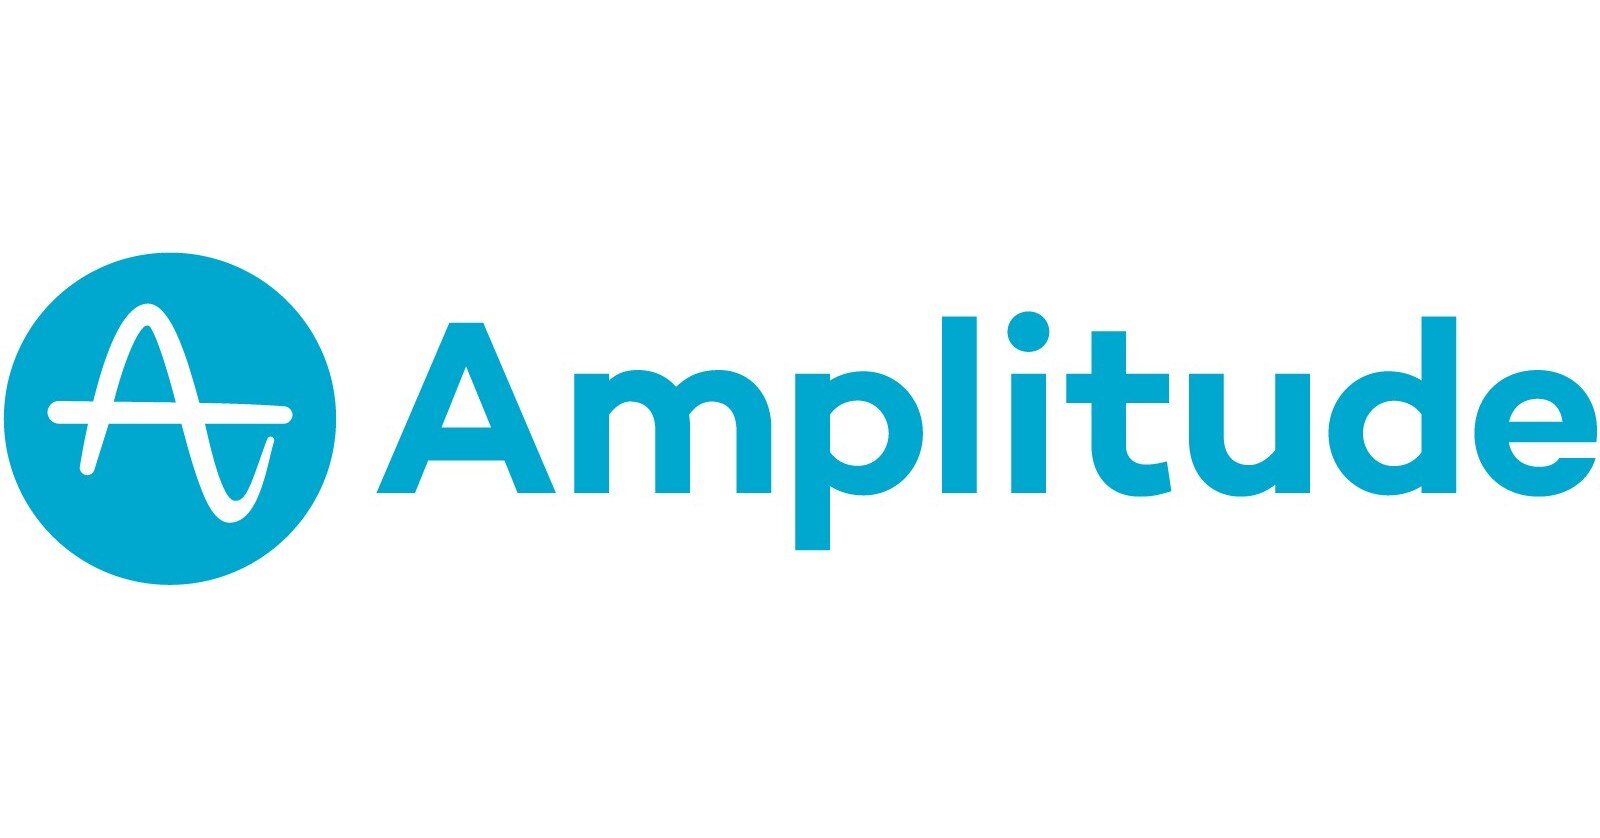 Amplitude_blue_logo.jpeg